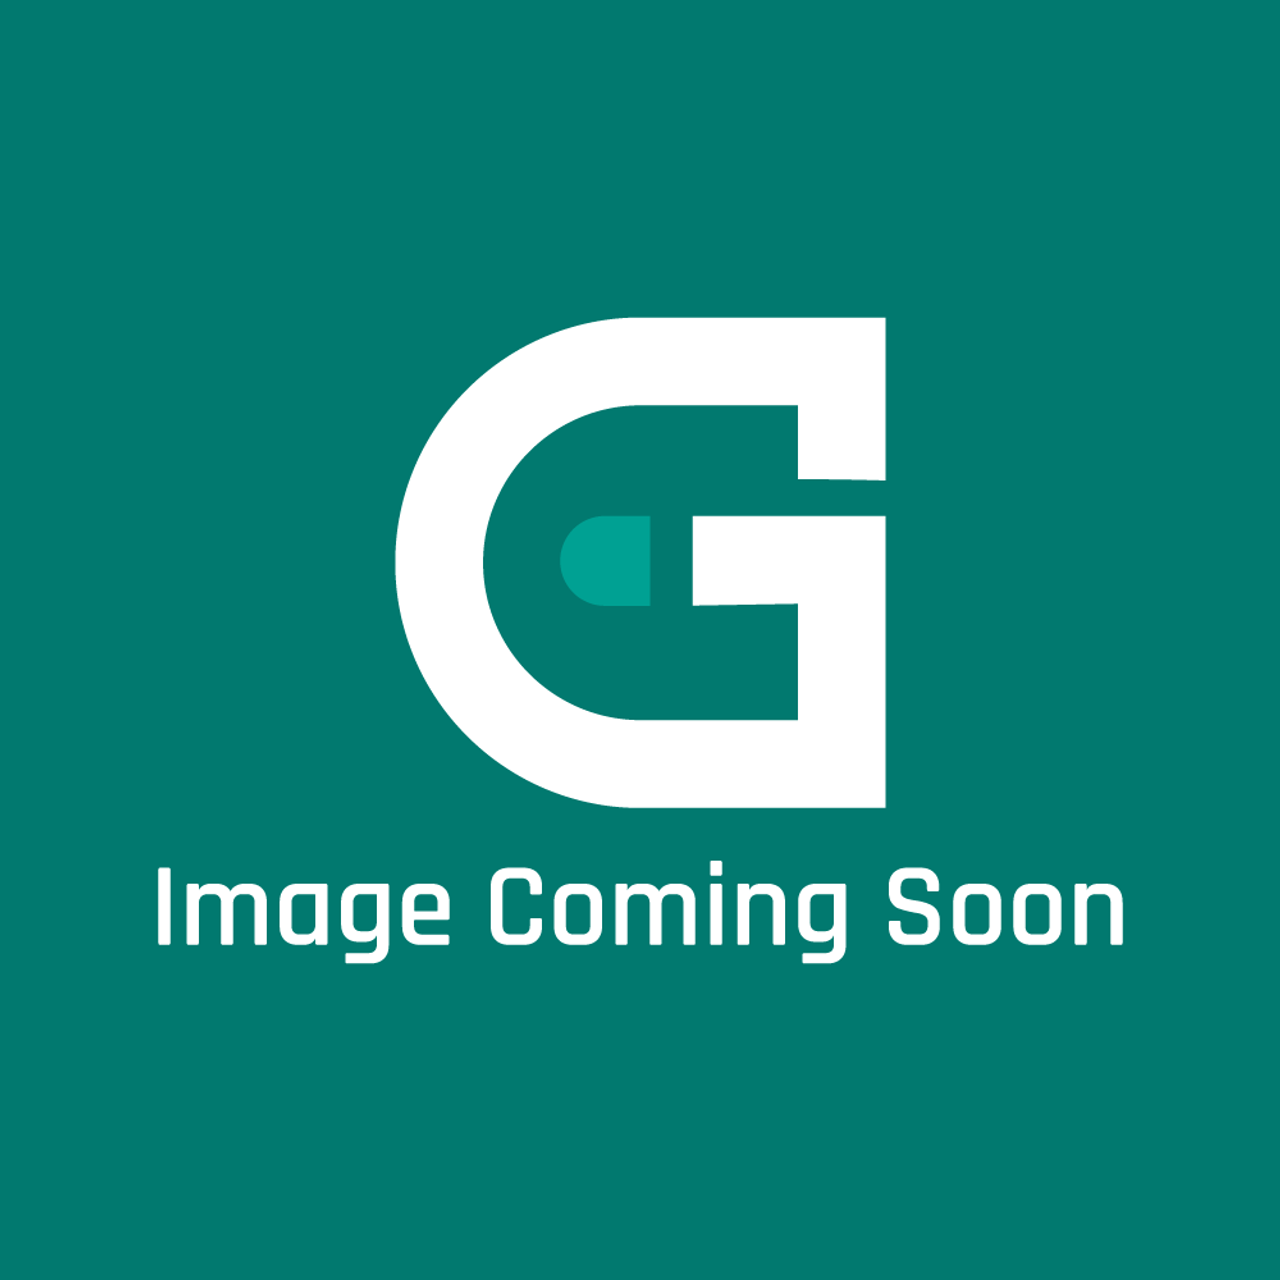 AGA Marvel A5107 - Badge - Aga (Classic) 6-4 Cream *Restric - Image Coming Soon!